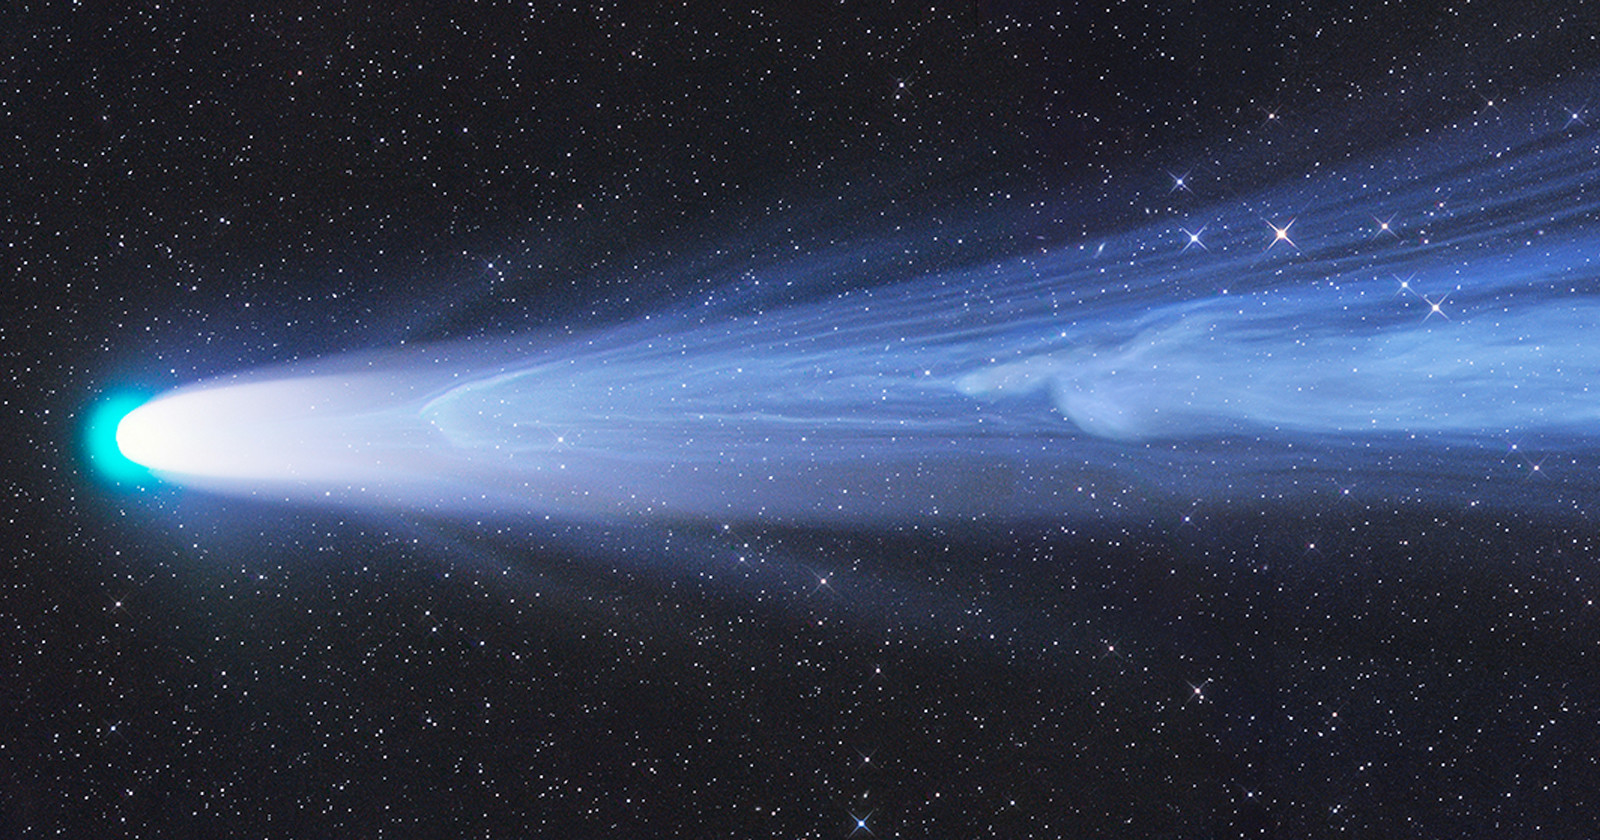  last photo comet leonard wins astronomy photographer 